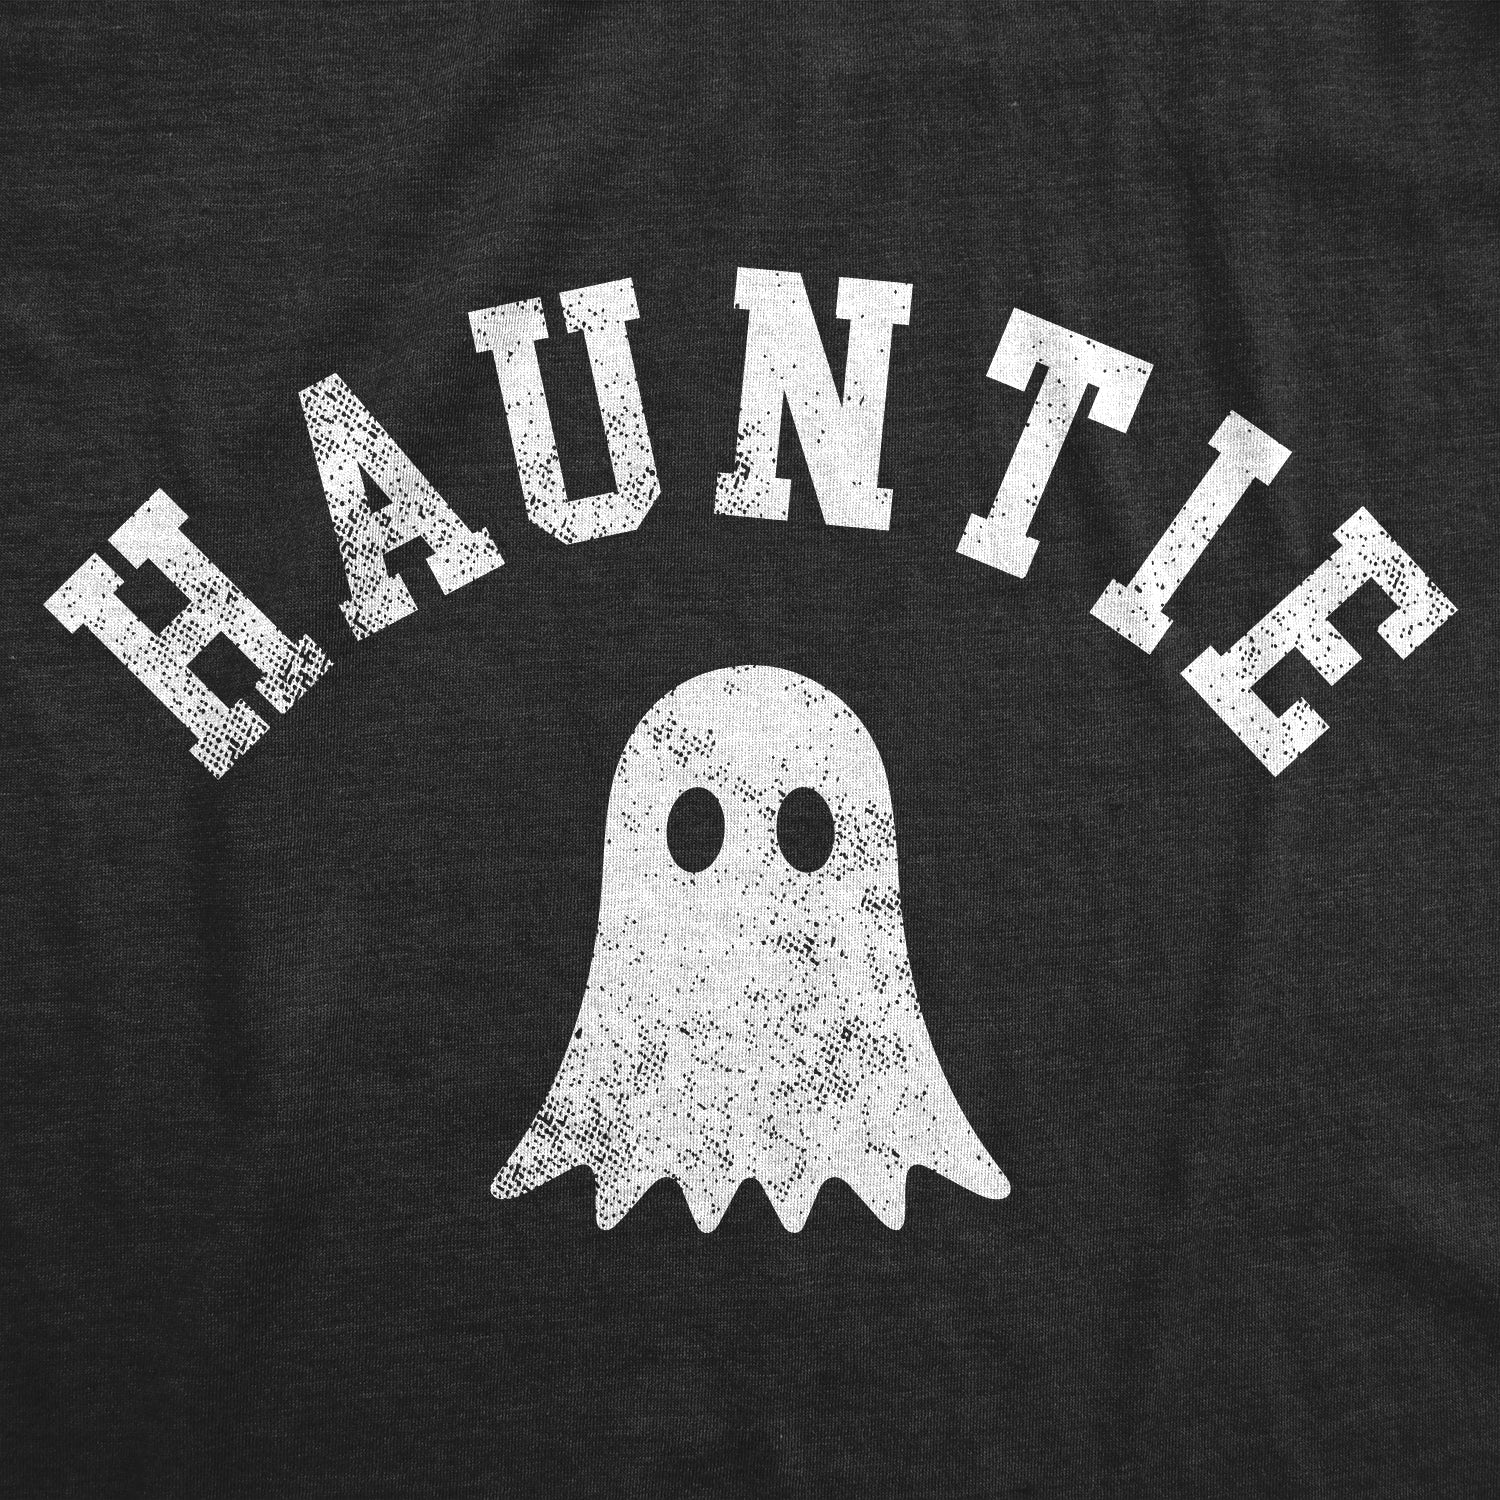 Funny Heather Black - HAUNTIE Hauntie Womens T Shirt Nerdy Halloween Aunt Tee